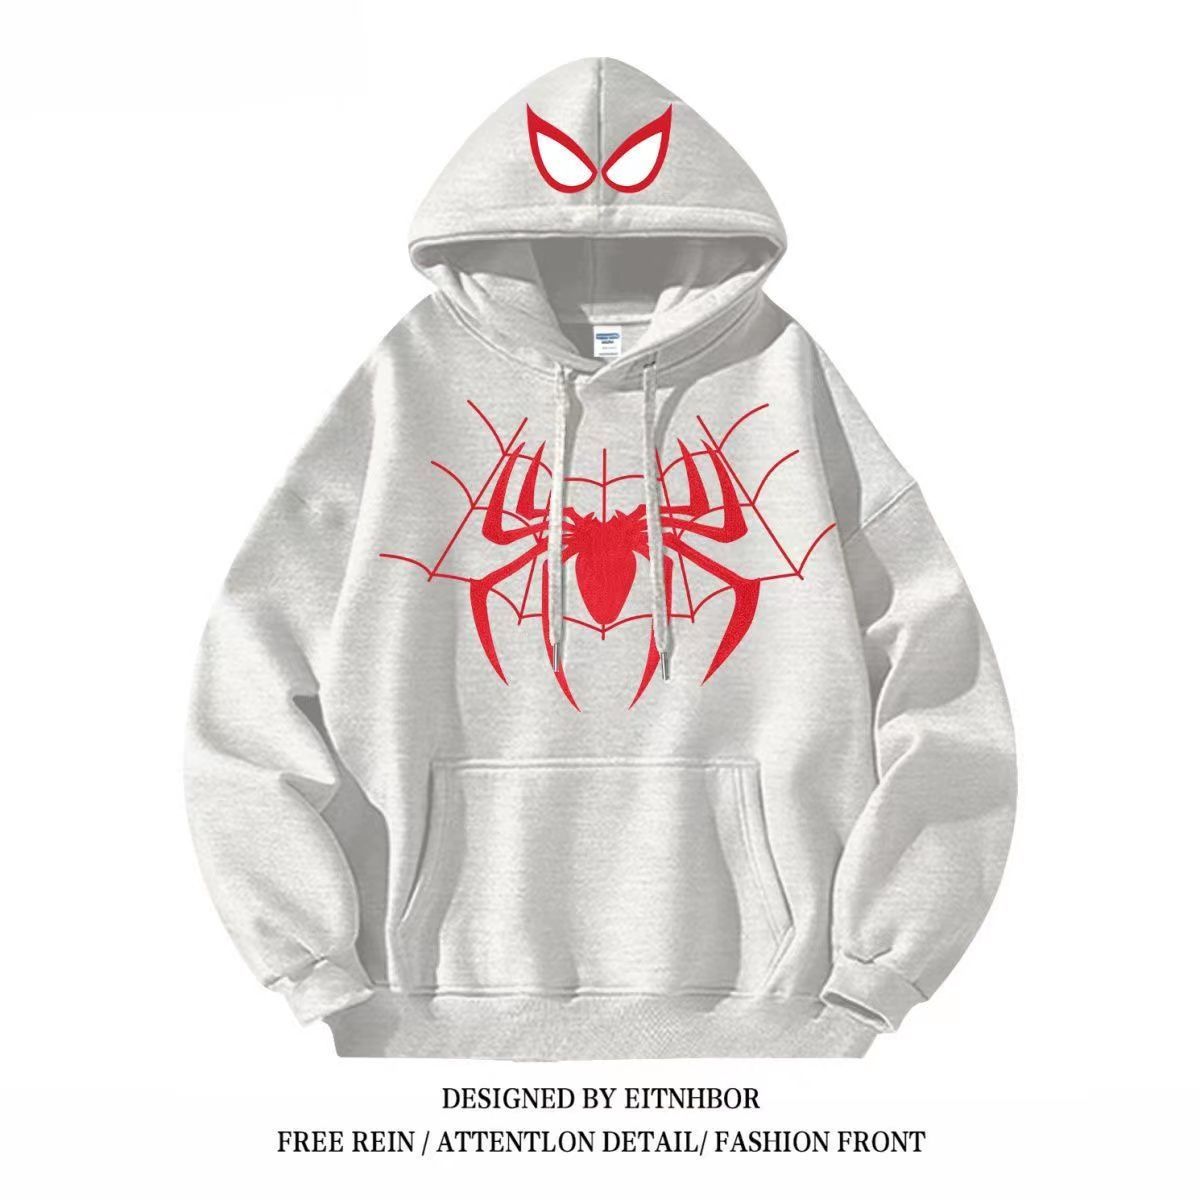 Spider-man clothes